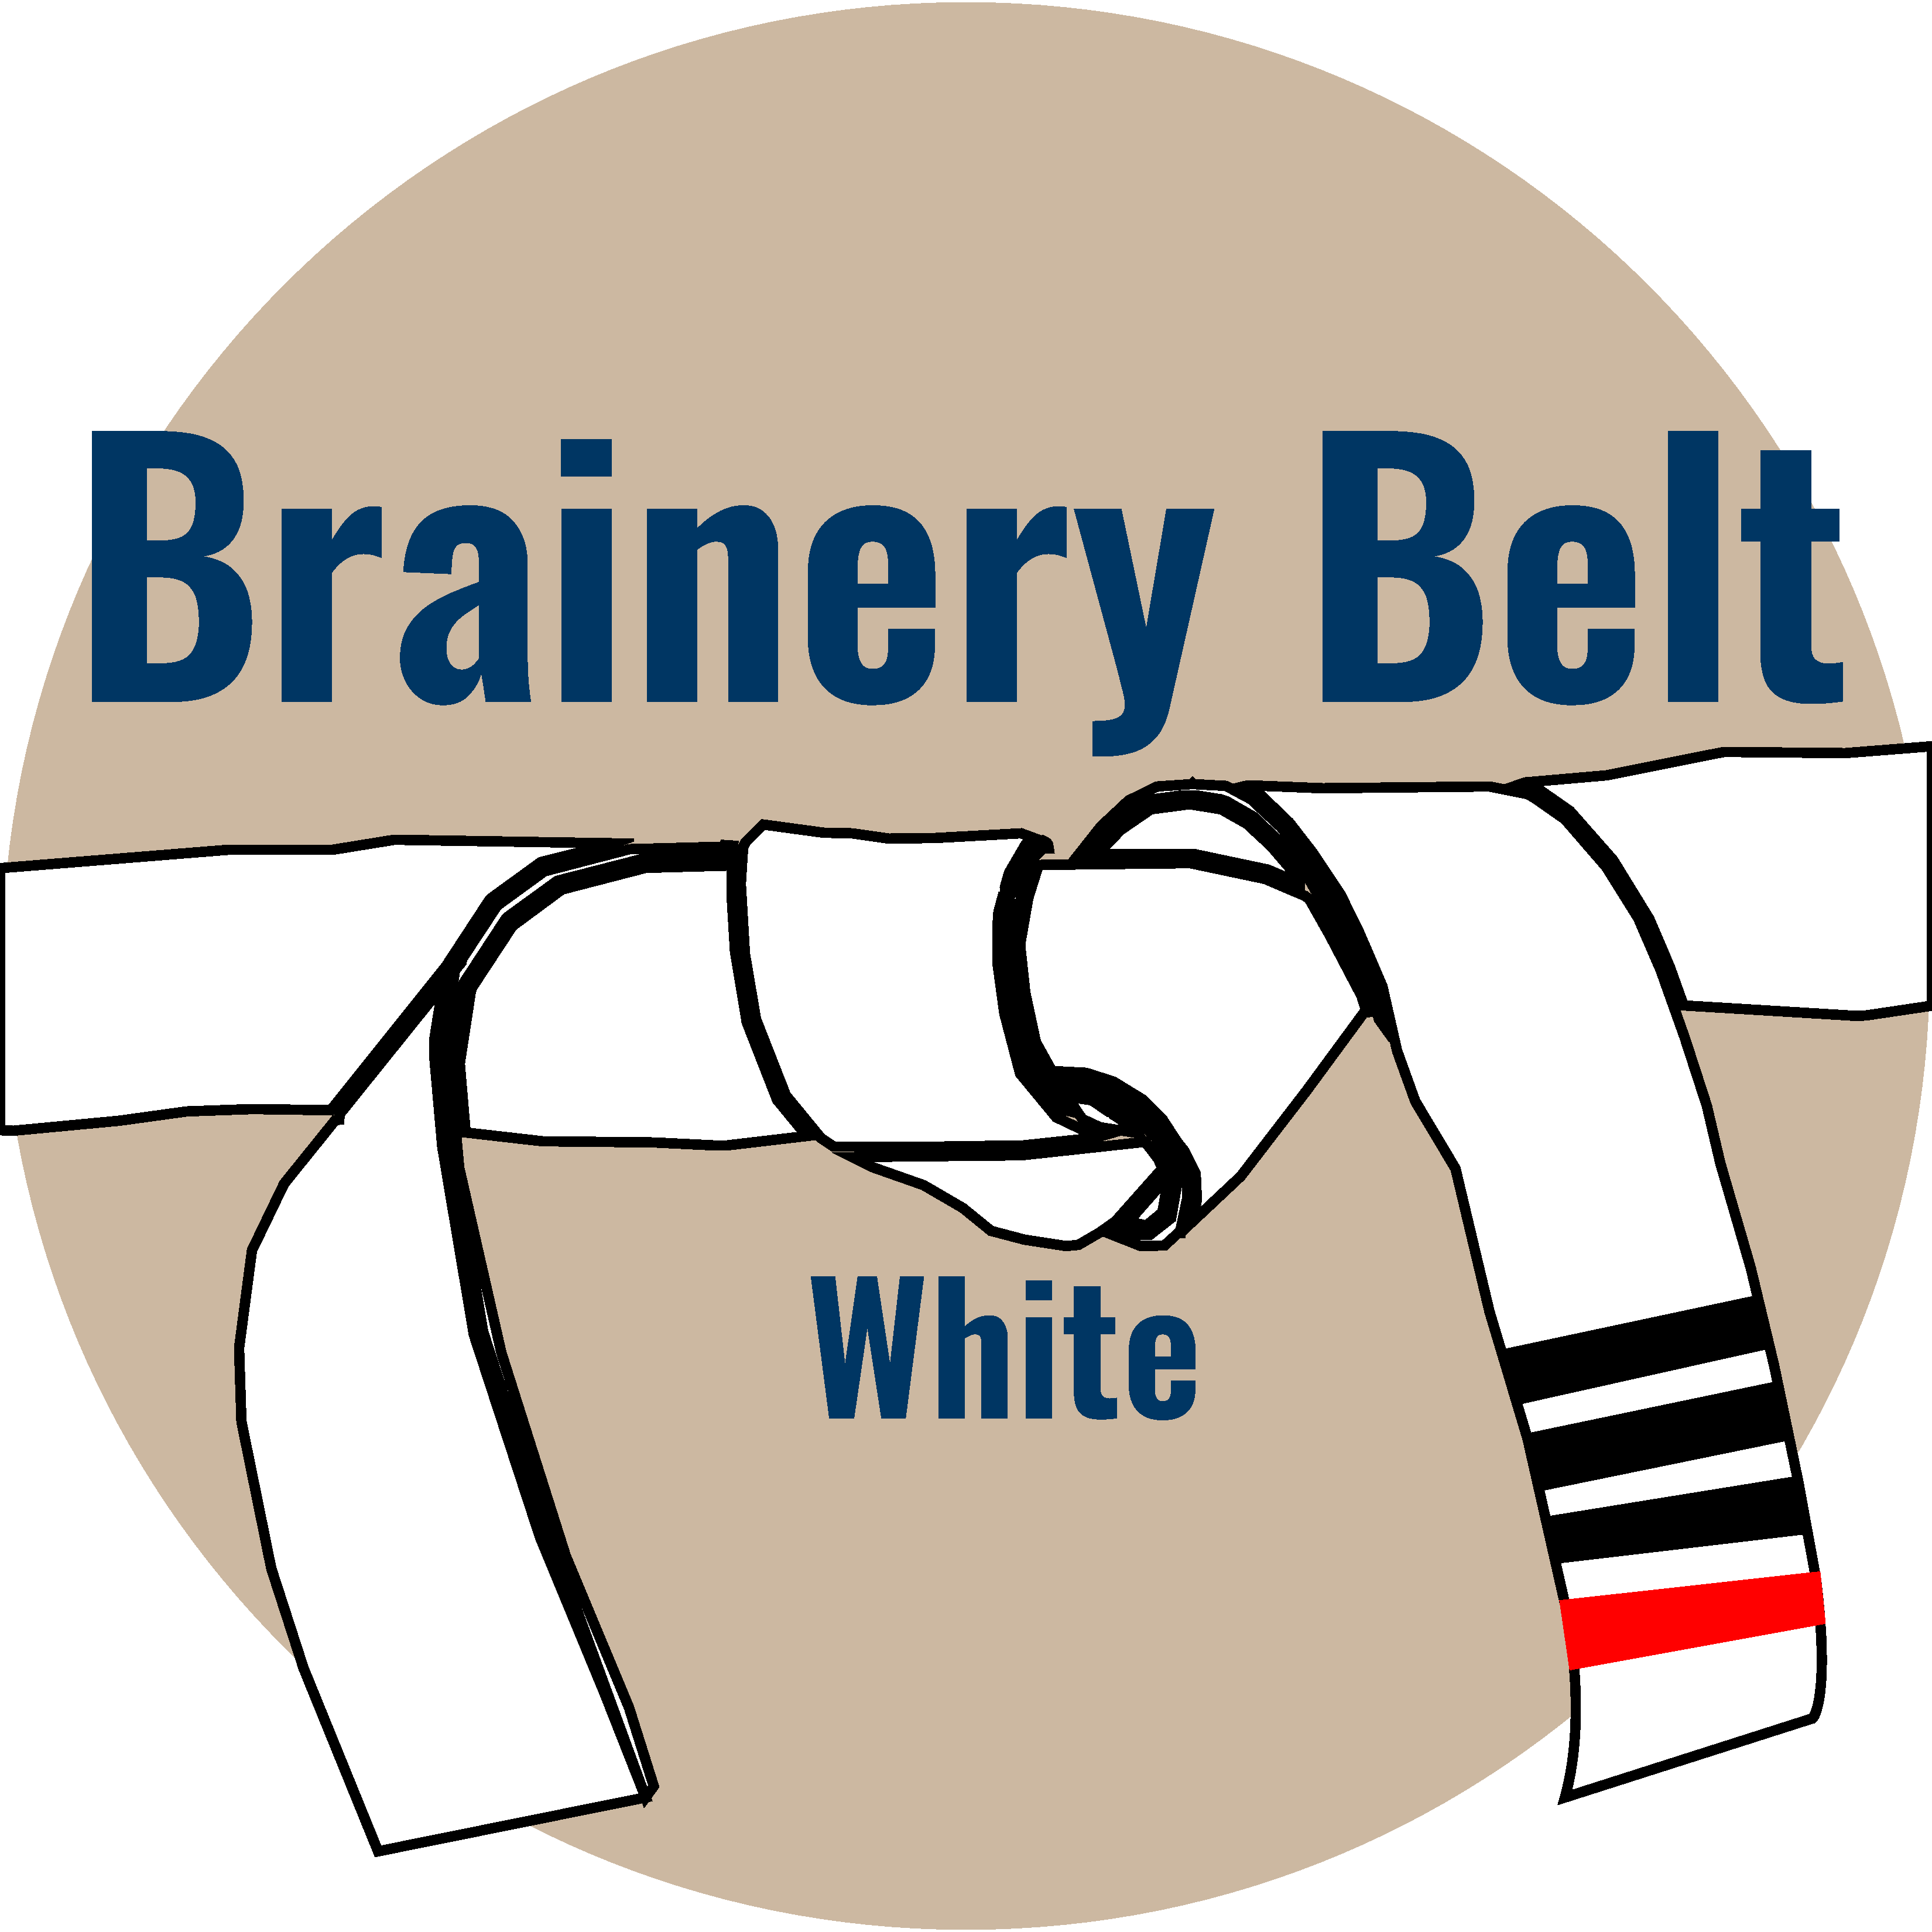 UC2 Brainery White Belt IIII